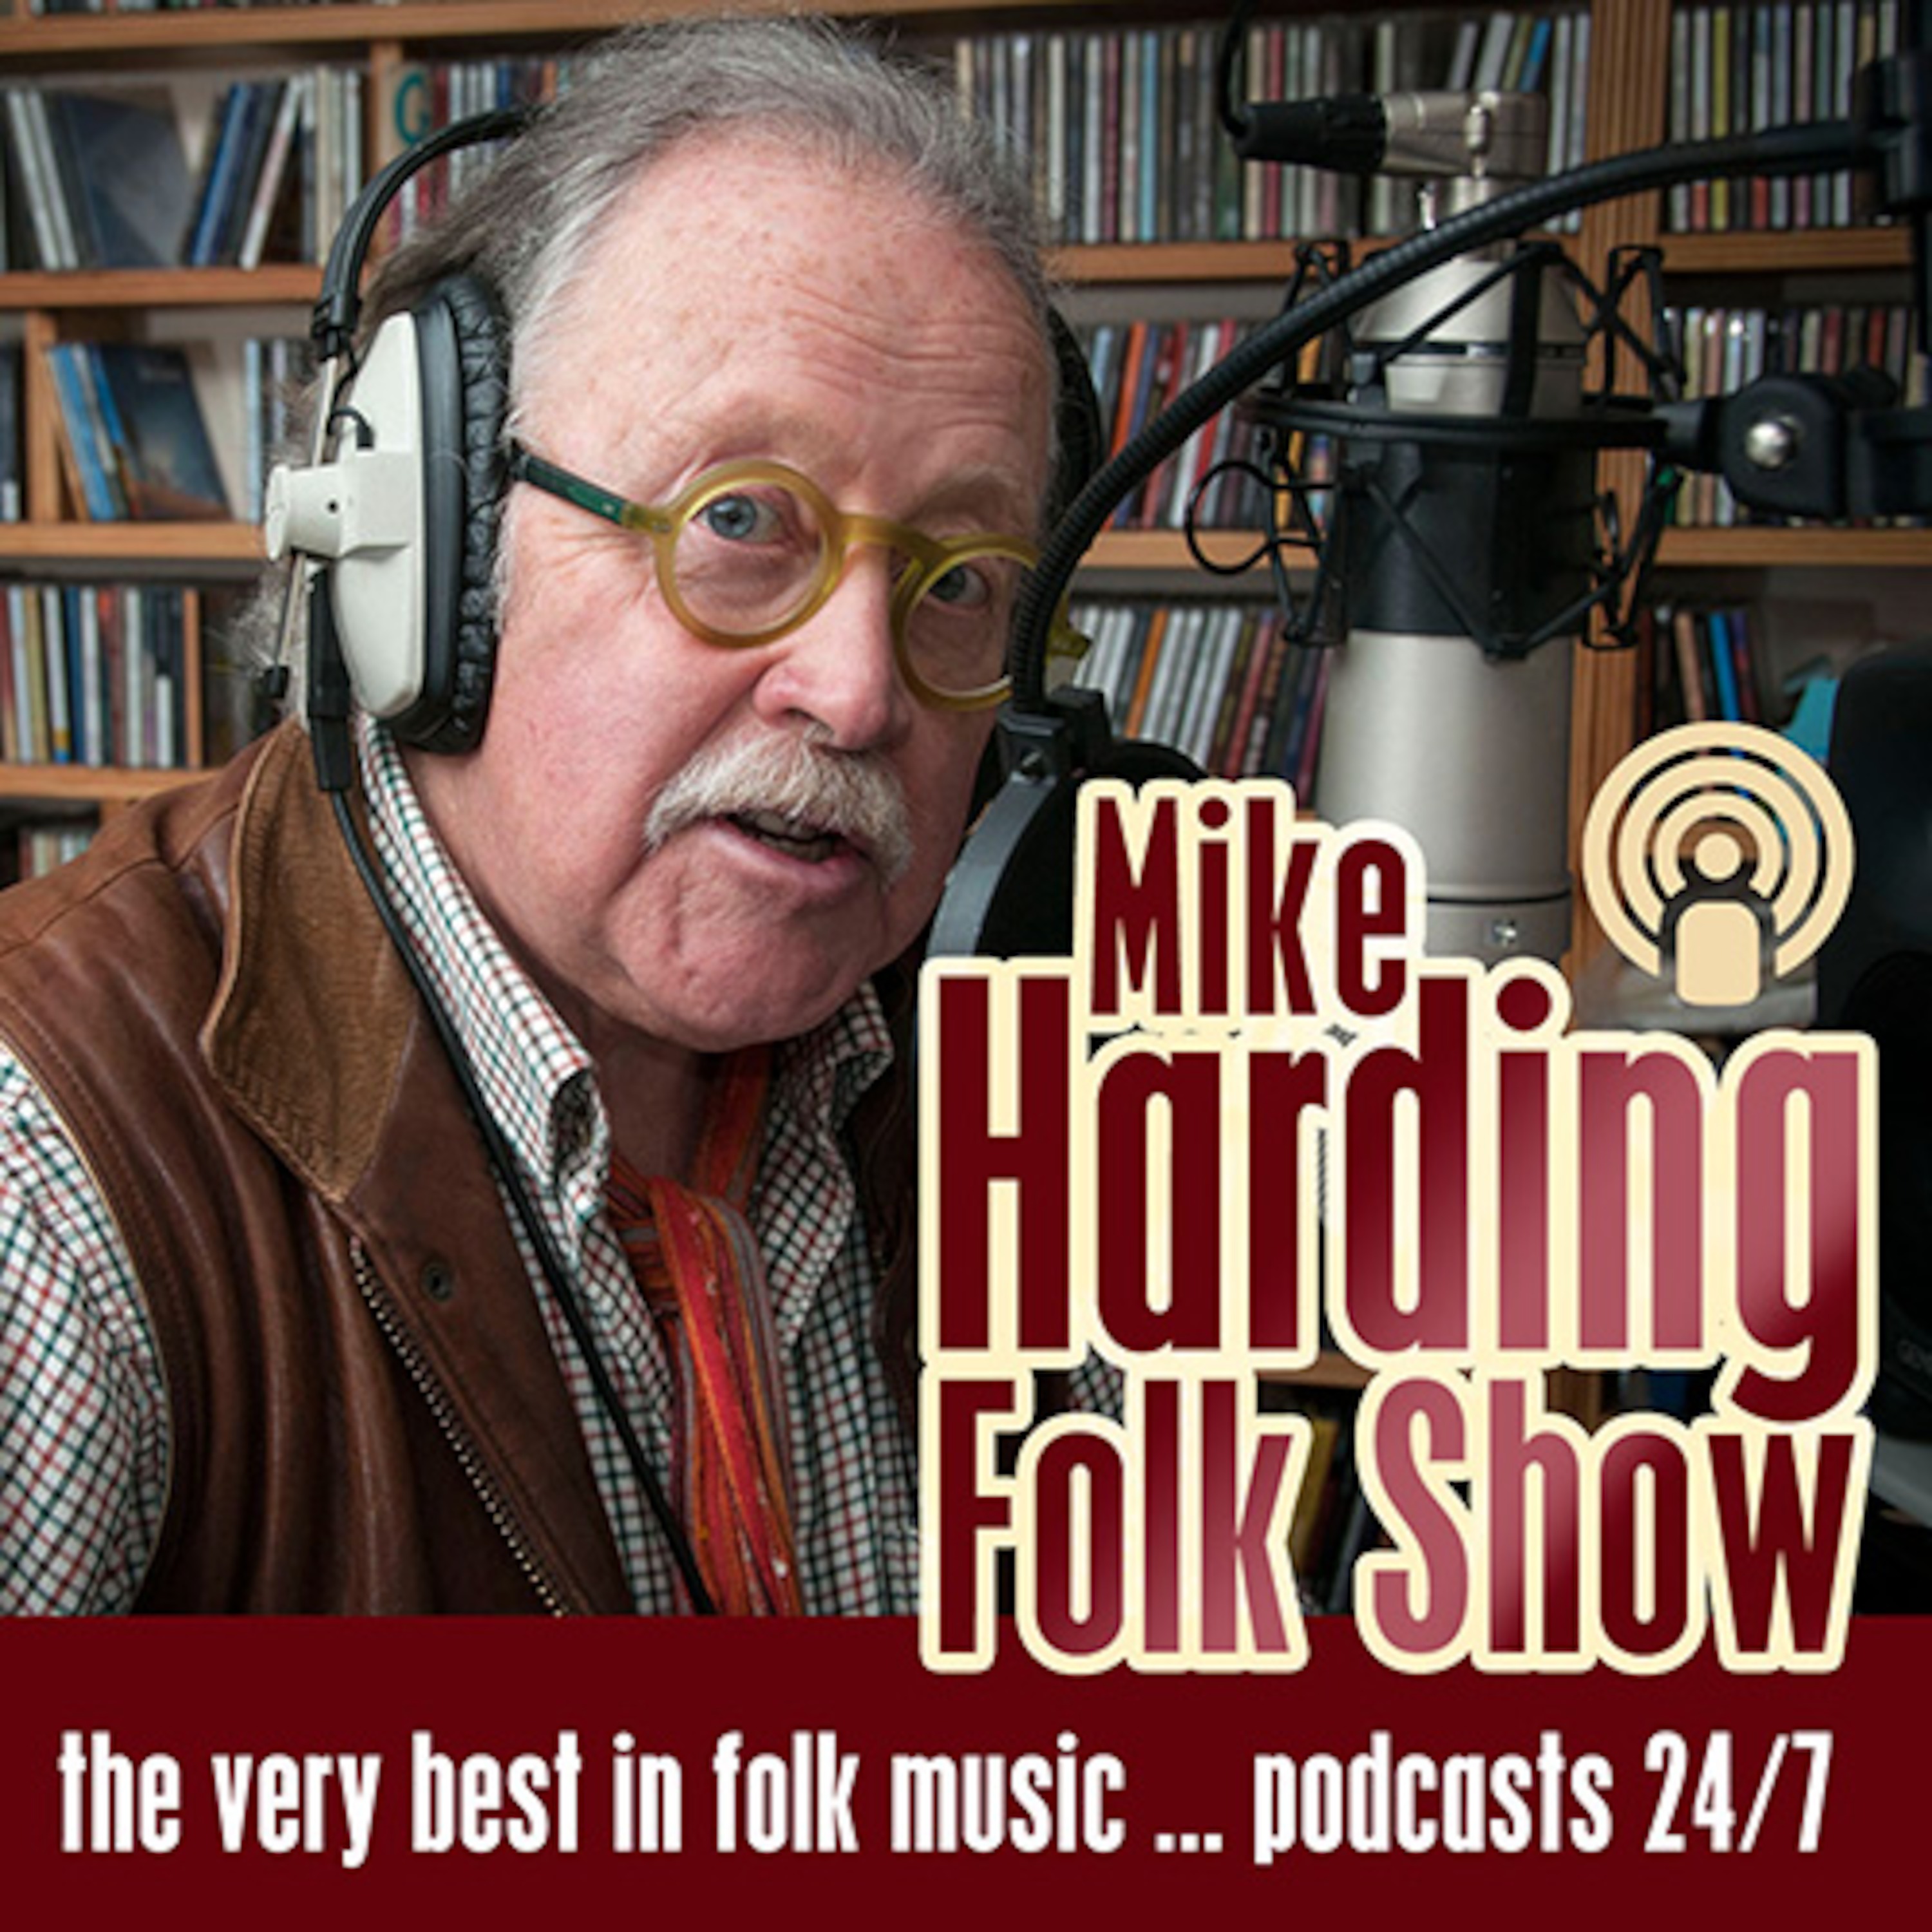 Mike Harding Folk Show 251